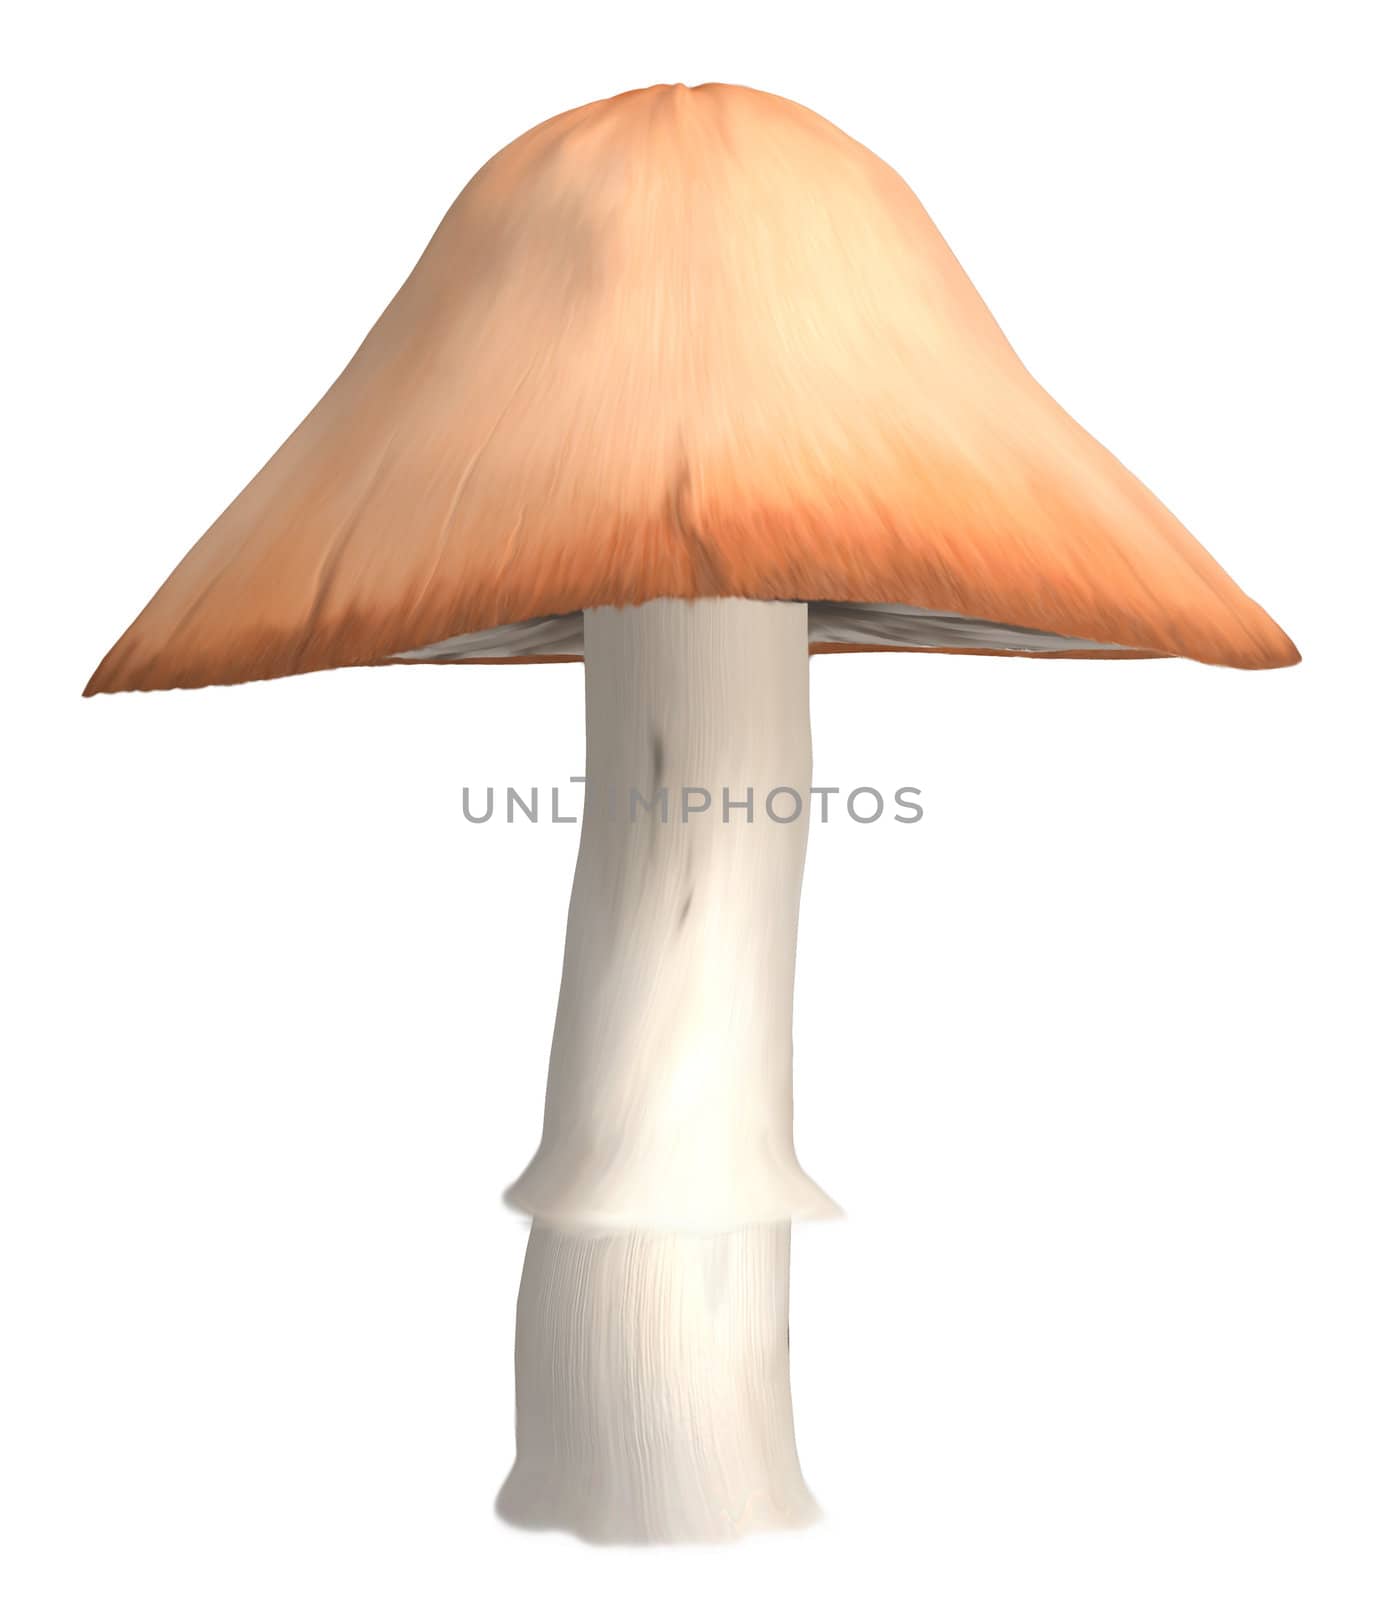 Orange Mushroom by kathygold